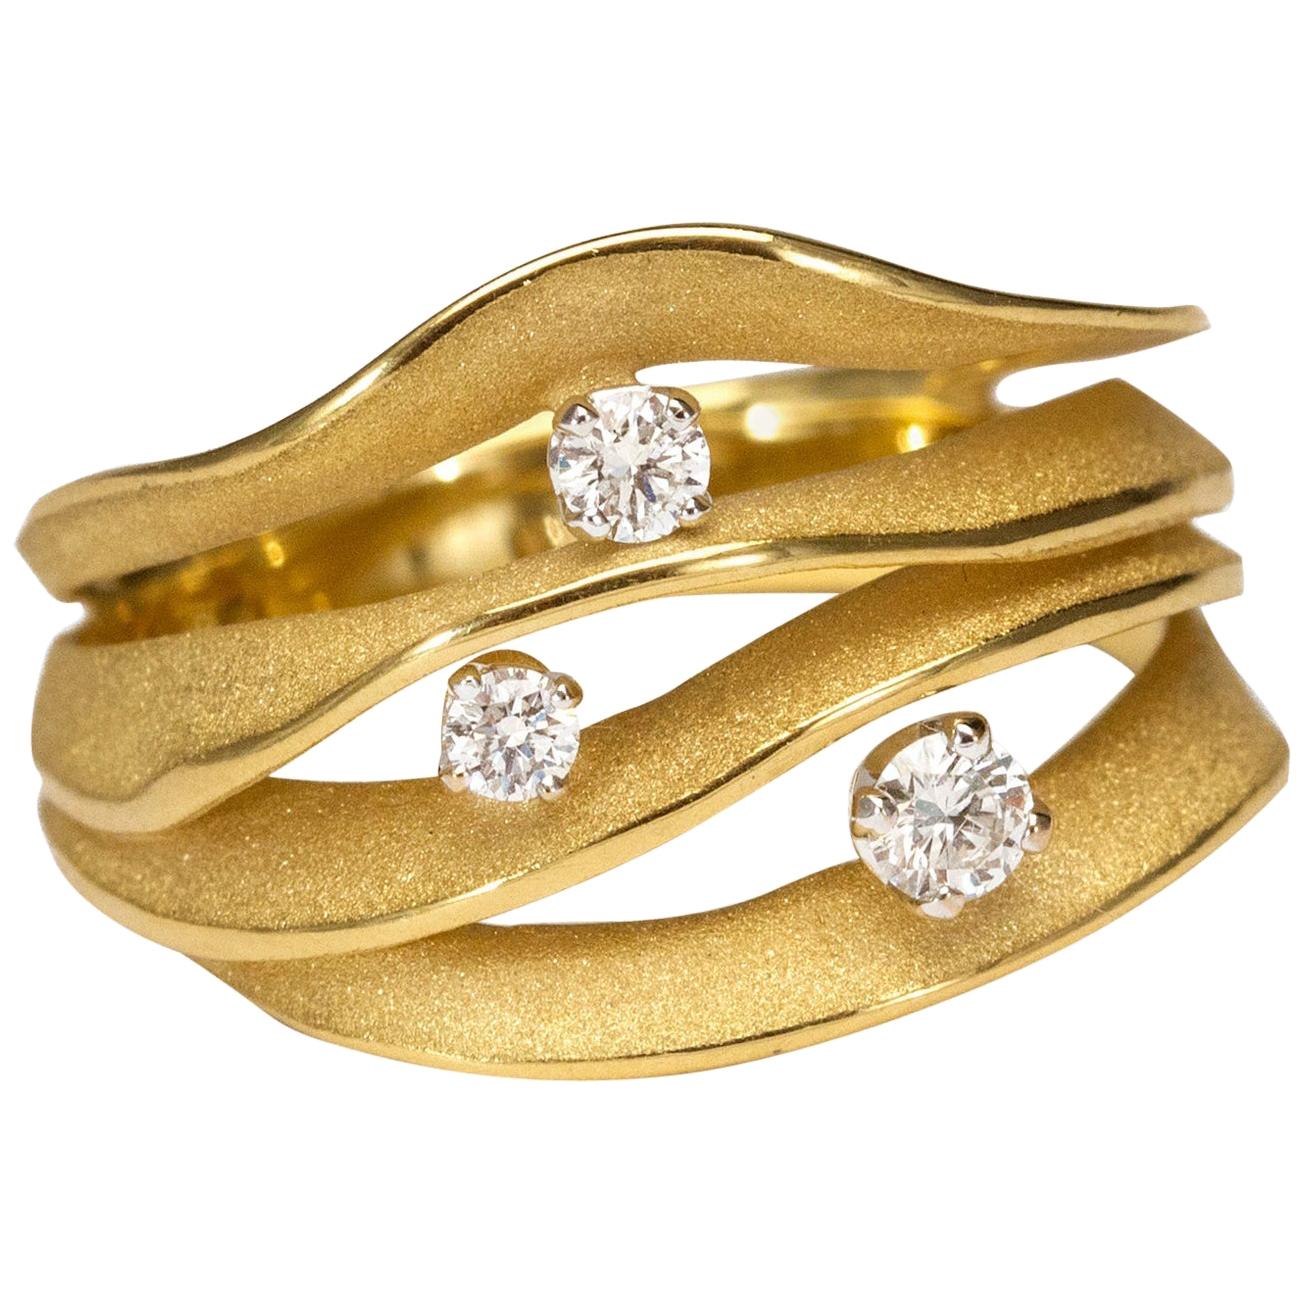 Annamaria Cammilli „Dune Royal“ Ring mit Diamanten in 18 Karat Gelbgold mit Sonnenaufgang